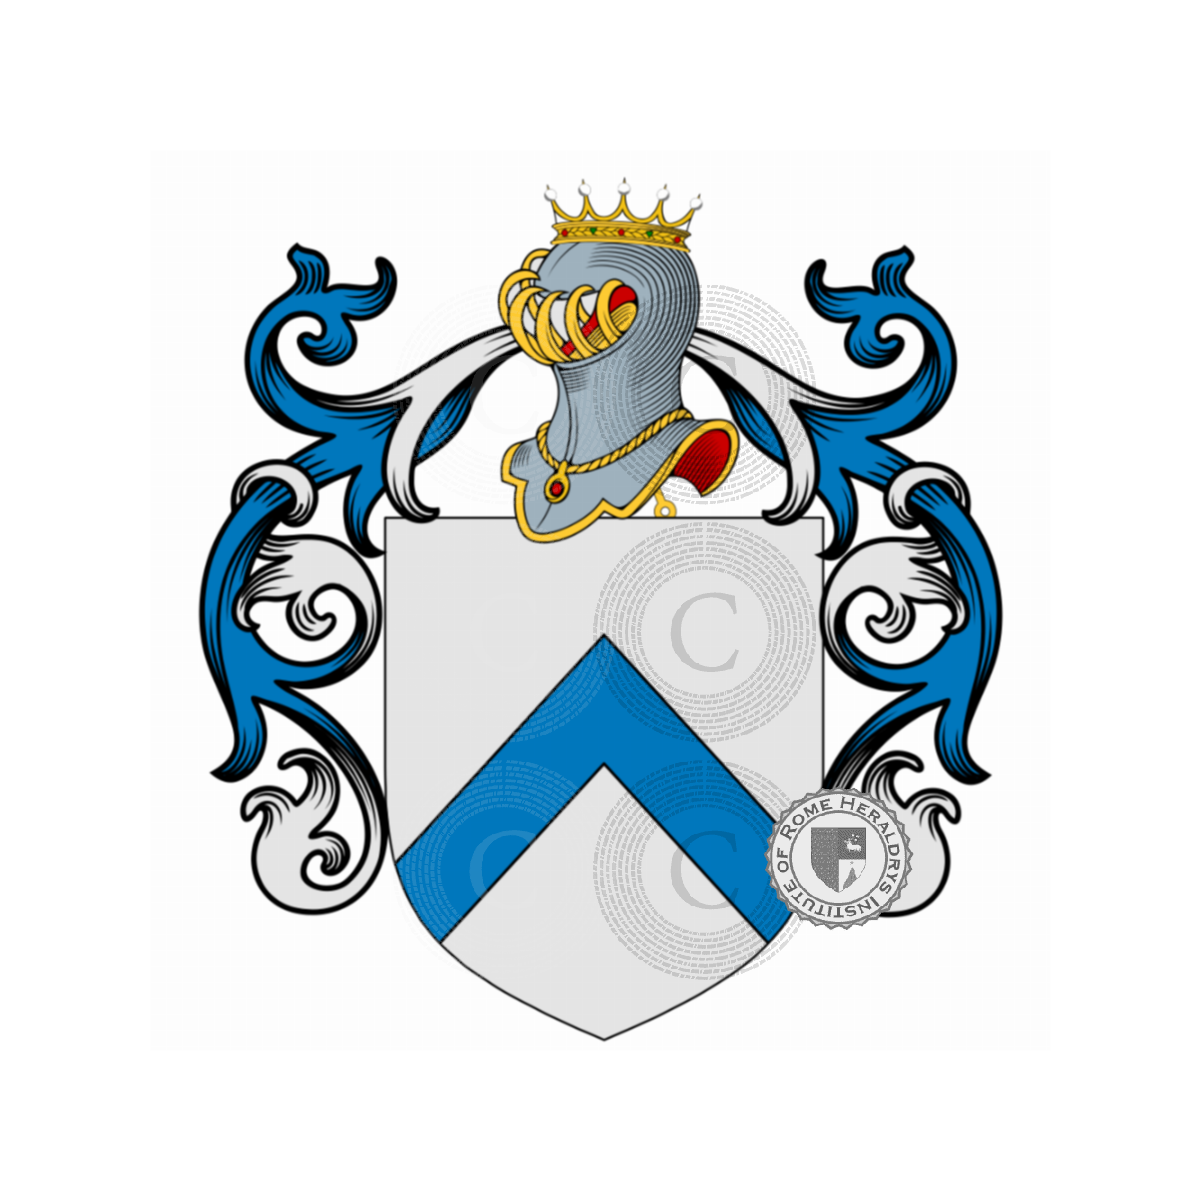 Coat of arms of familyPisani, Pisano,Pixani